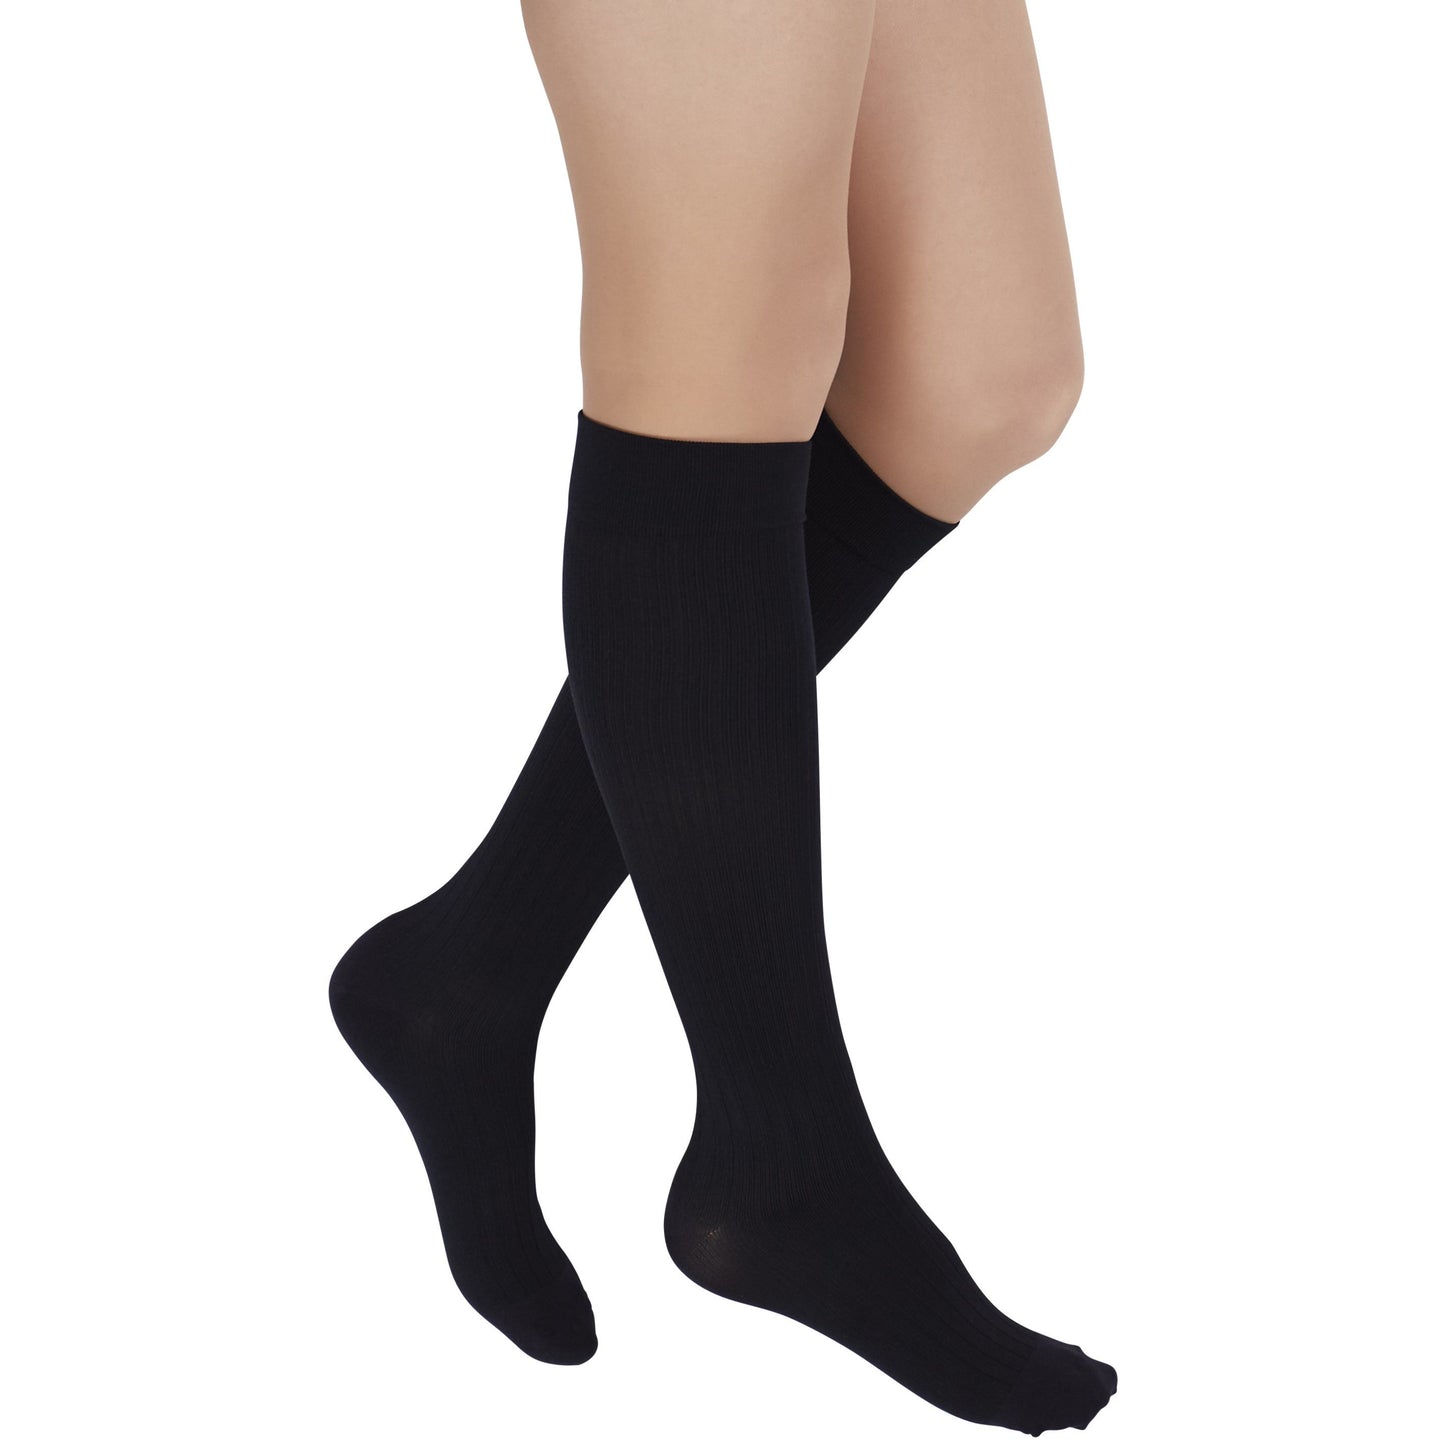 Rejuva Freedom 15-20 mmHg Compression Socks, Black